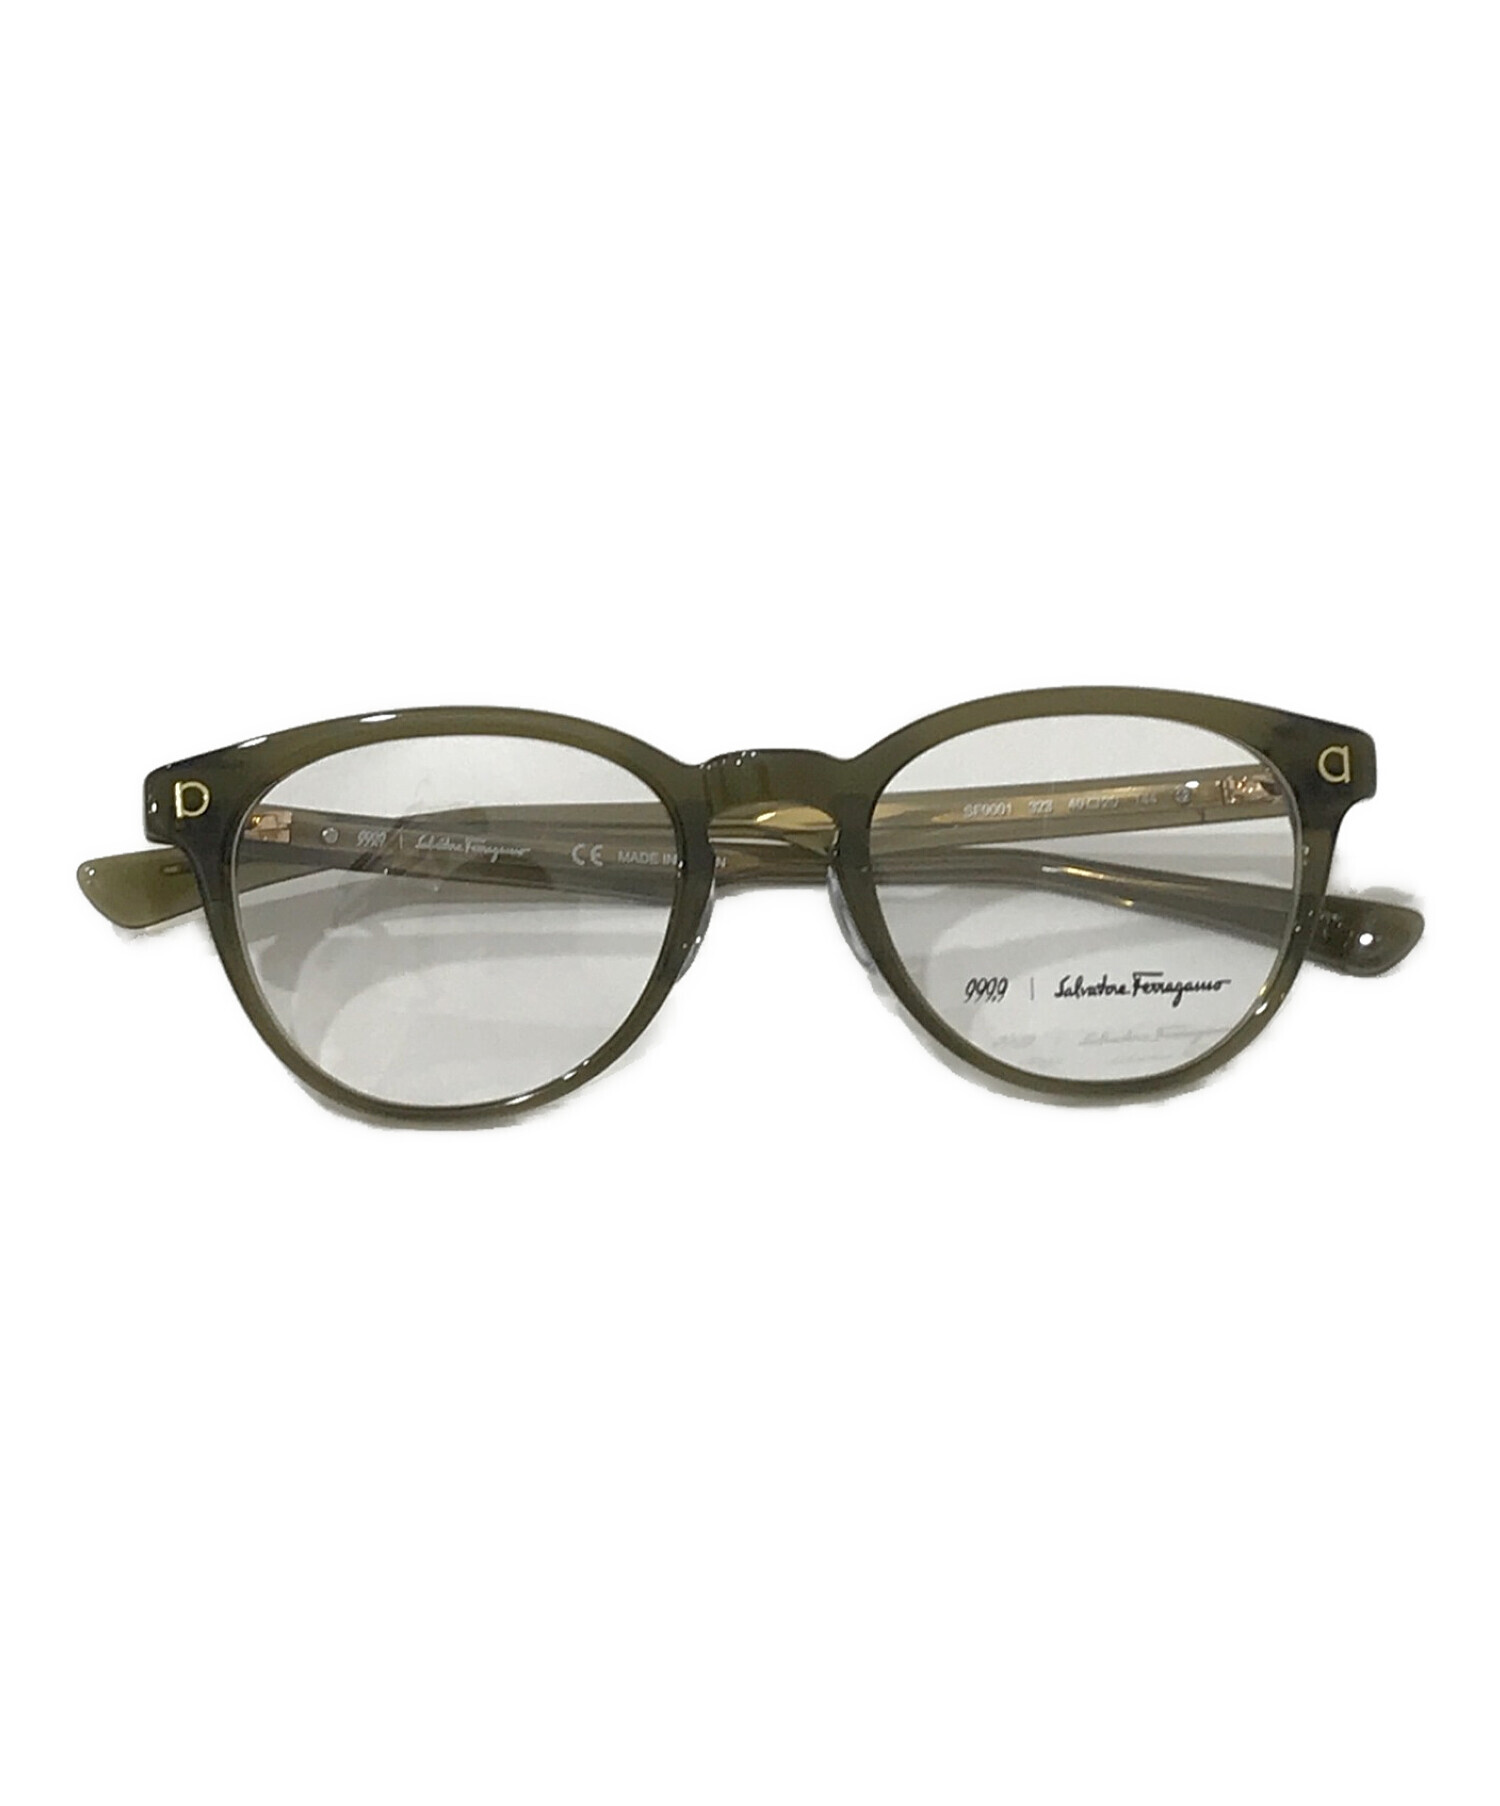 Salvatore Ferragamo × 999.9 (サルヴァトーレ フェラガモ × フォーナインズ) 眼鏡フレーム オリーブグリーン  サイズ:49□20 144